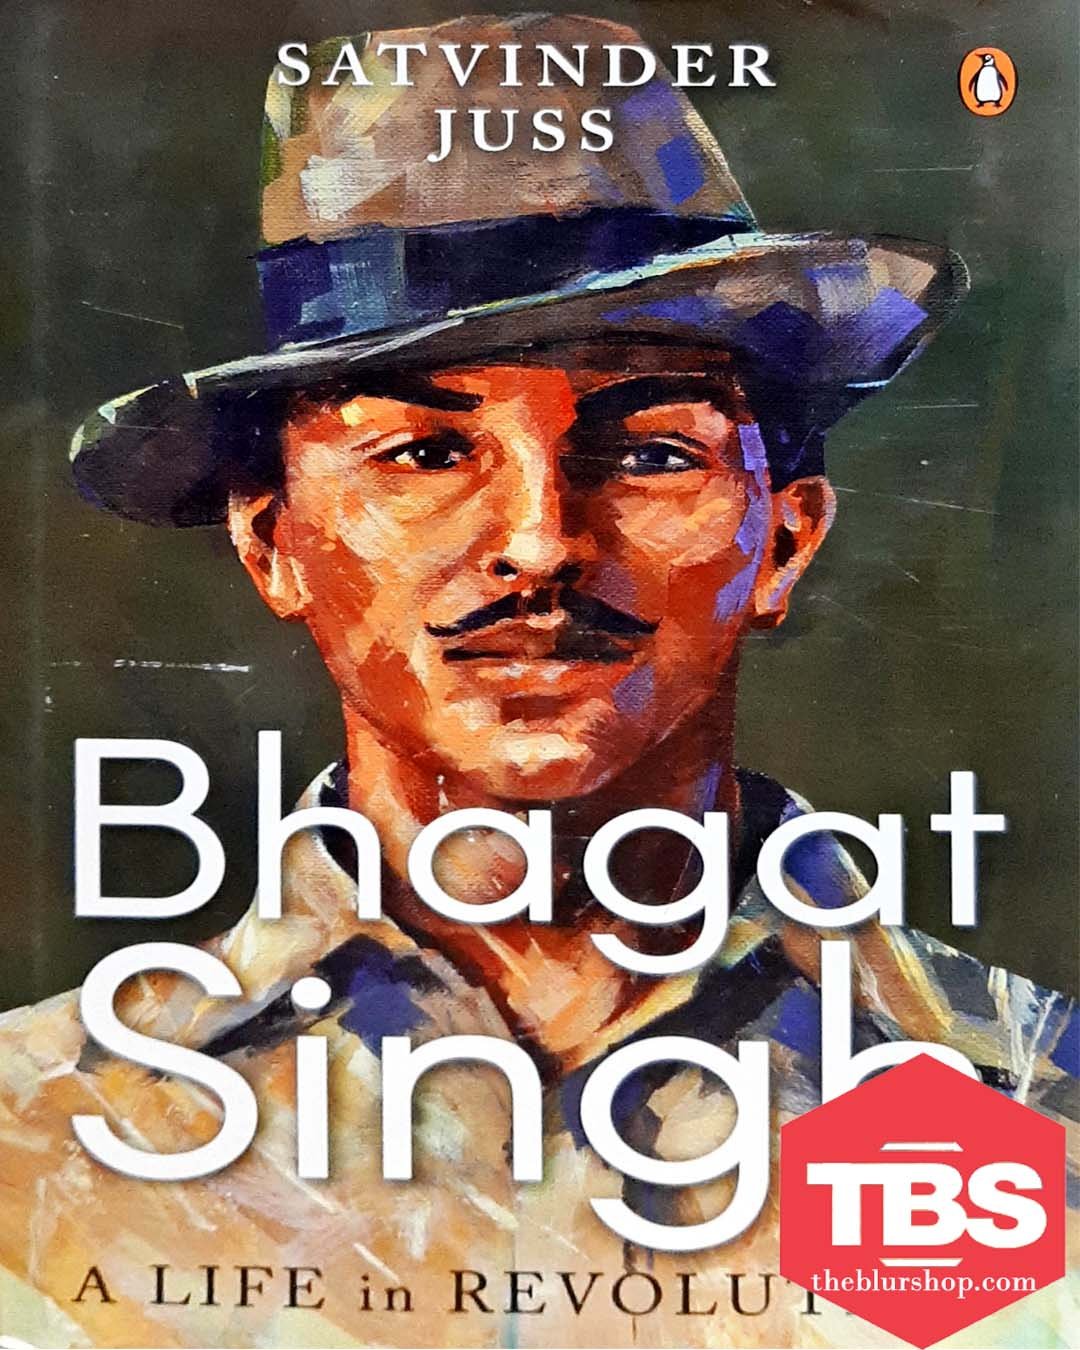 Bhagat Singh: A Life In Revolution